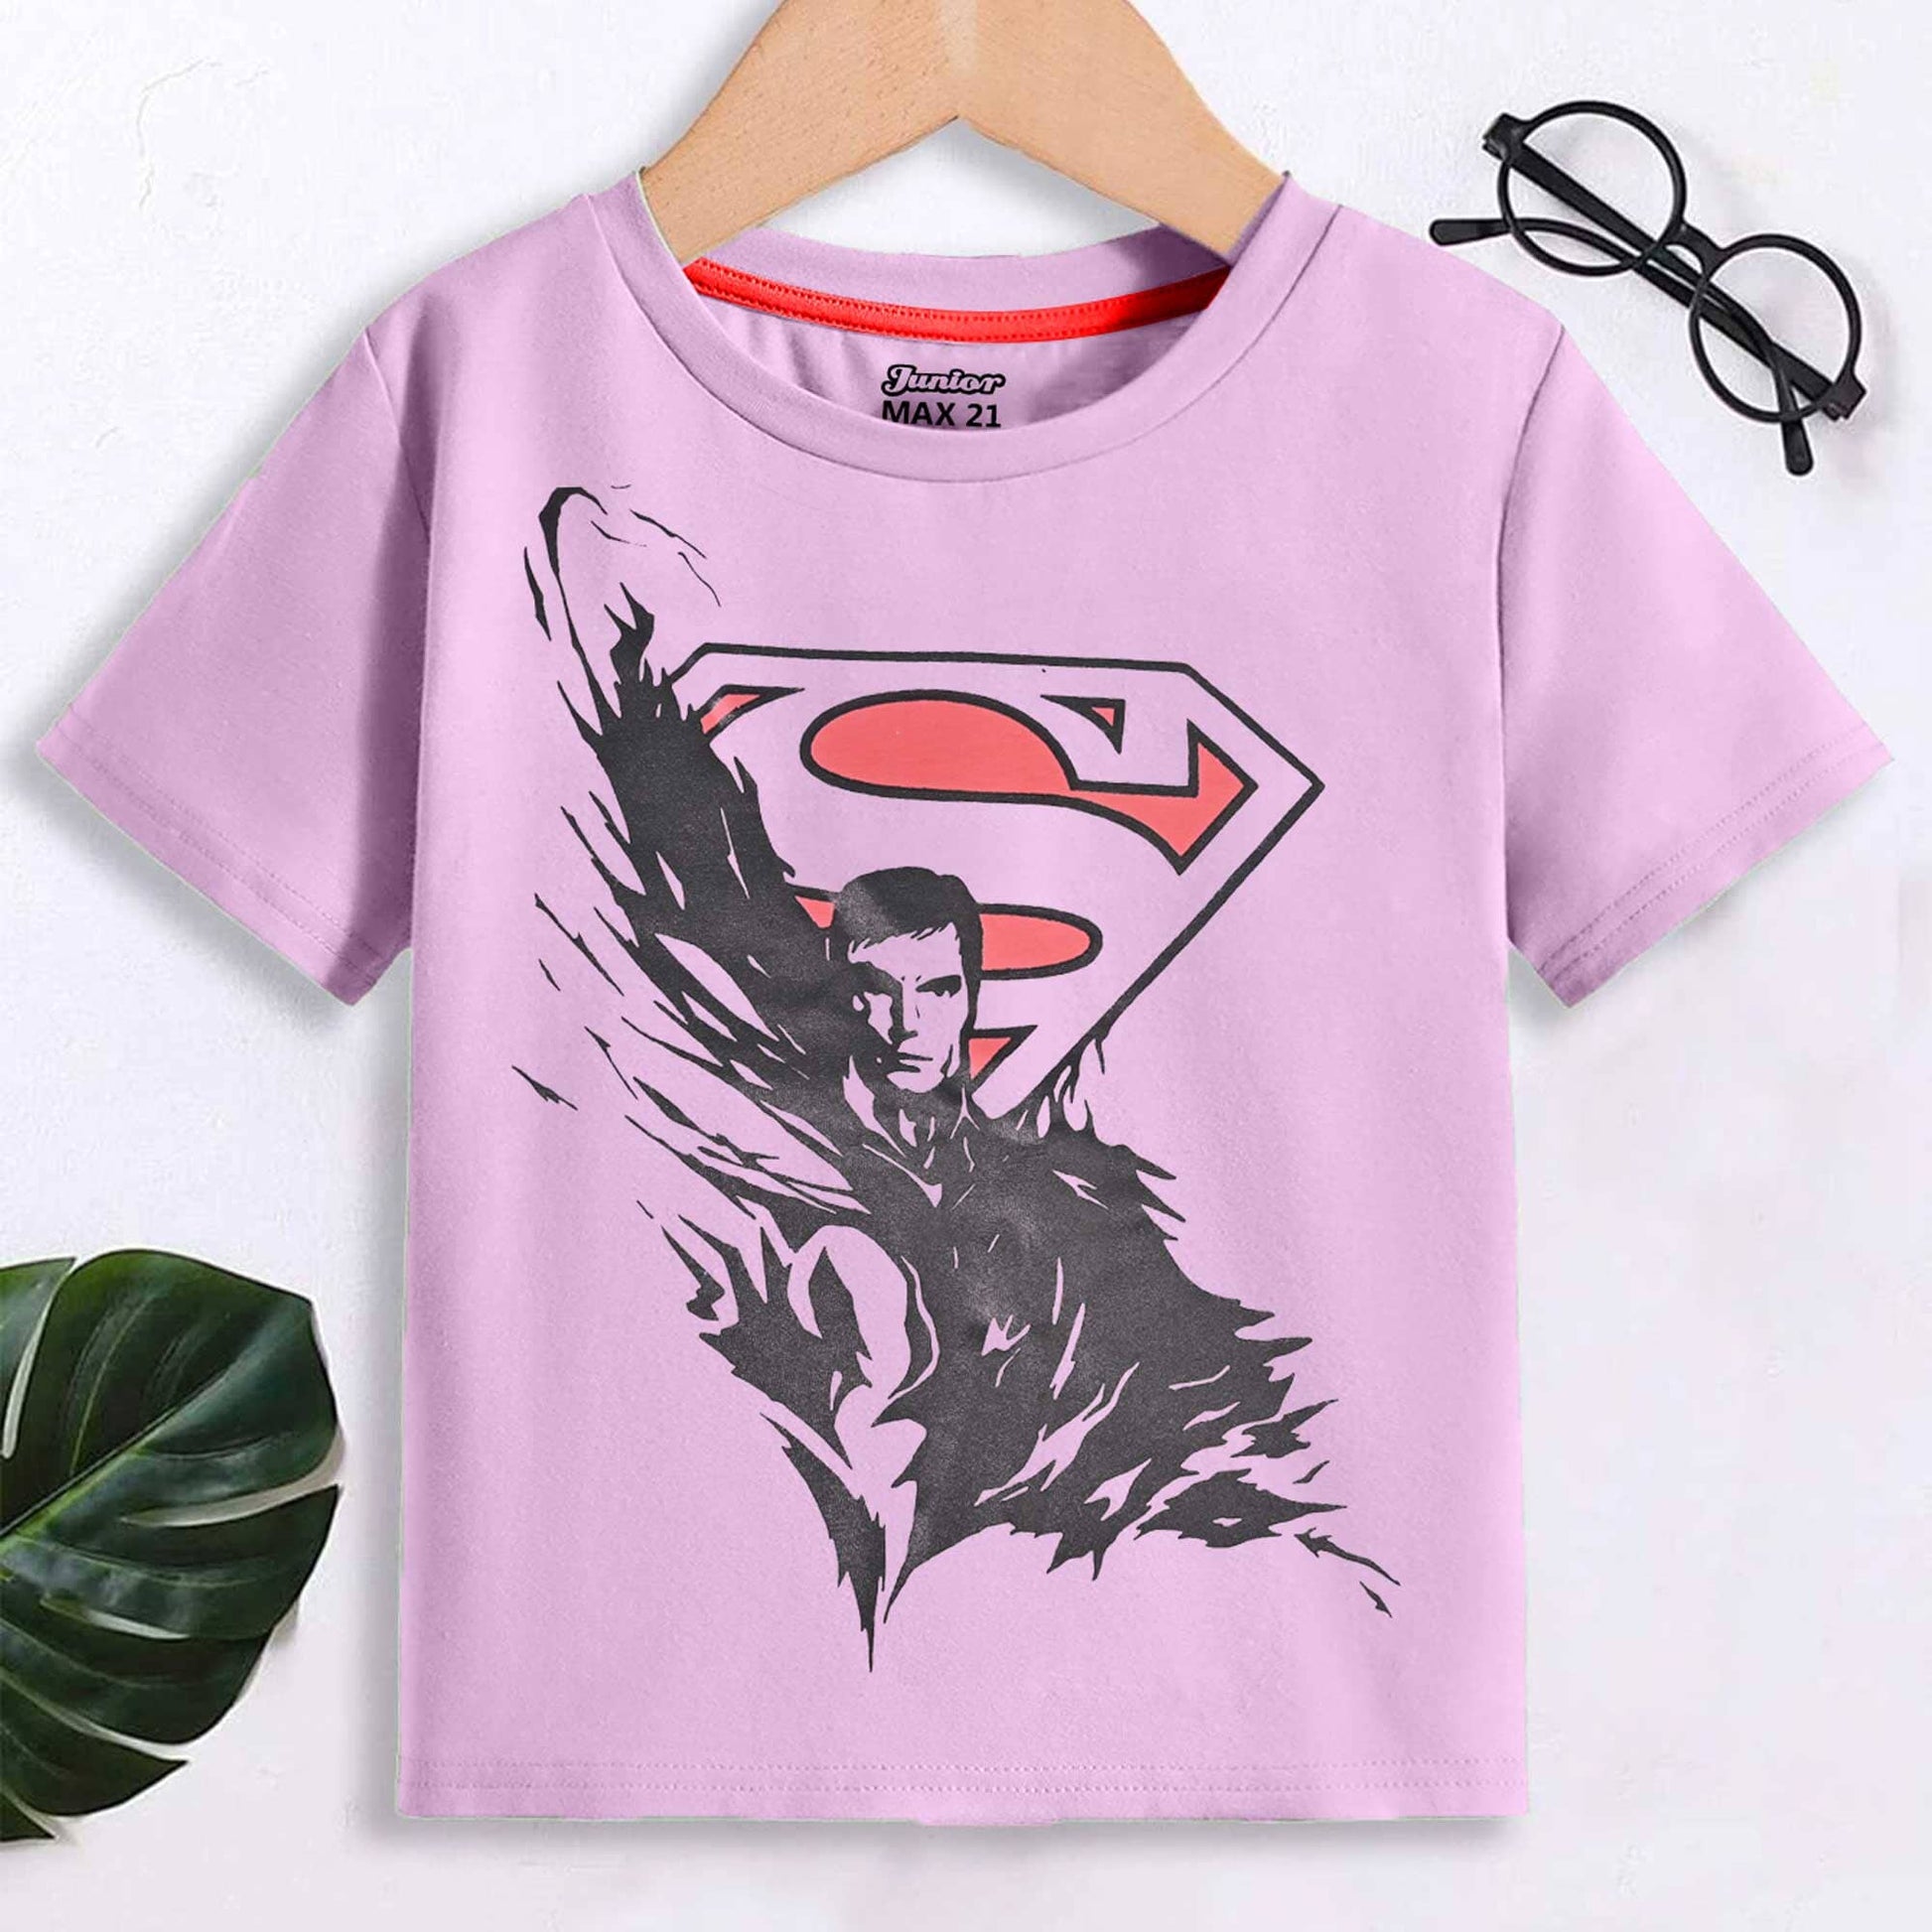 Junior Max 21 Kid's Superman Printed Tee Shirt Boy's Tee Shirt SZK Laveder 3-6 Months 